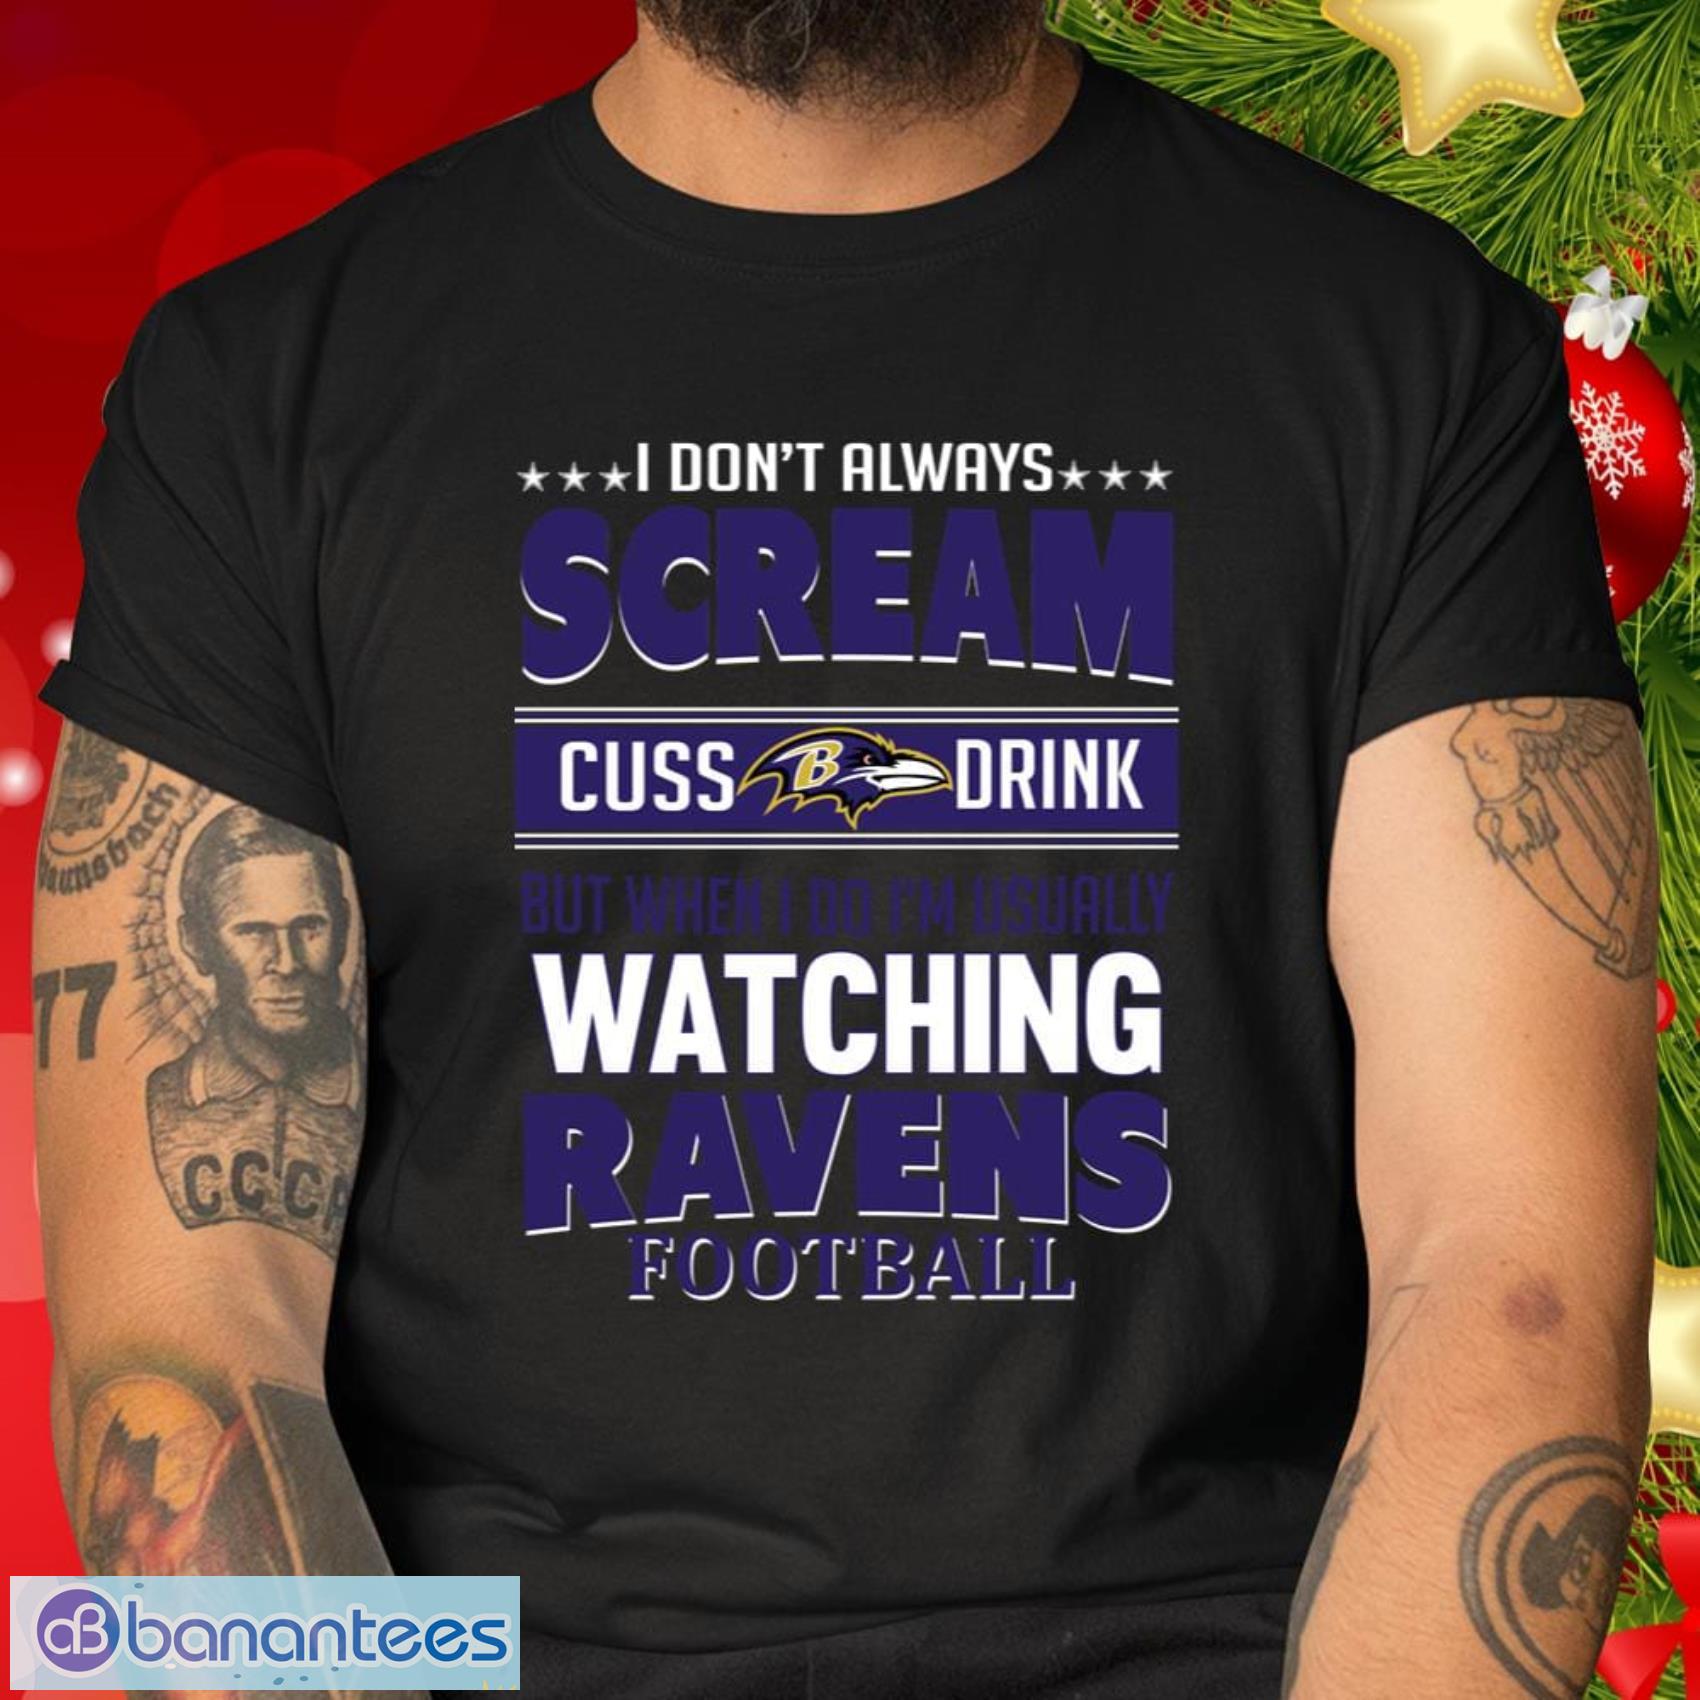 Baltimore Ravens NFL Football Gift Fr Fans I Scream Cuss Drink When I’m Watching My Team T Shirt - Baltimore Ravens NFL Football I Scream Cuss Drink When I’m Watching My Team T Shirt_2